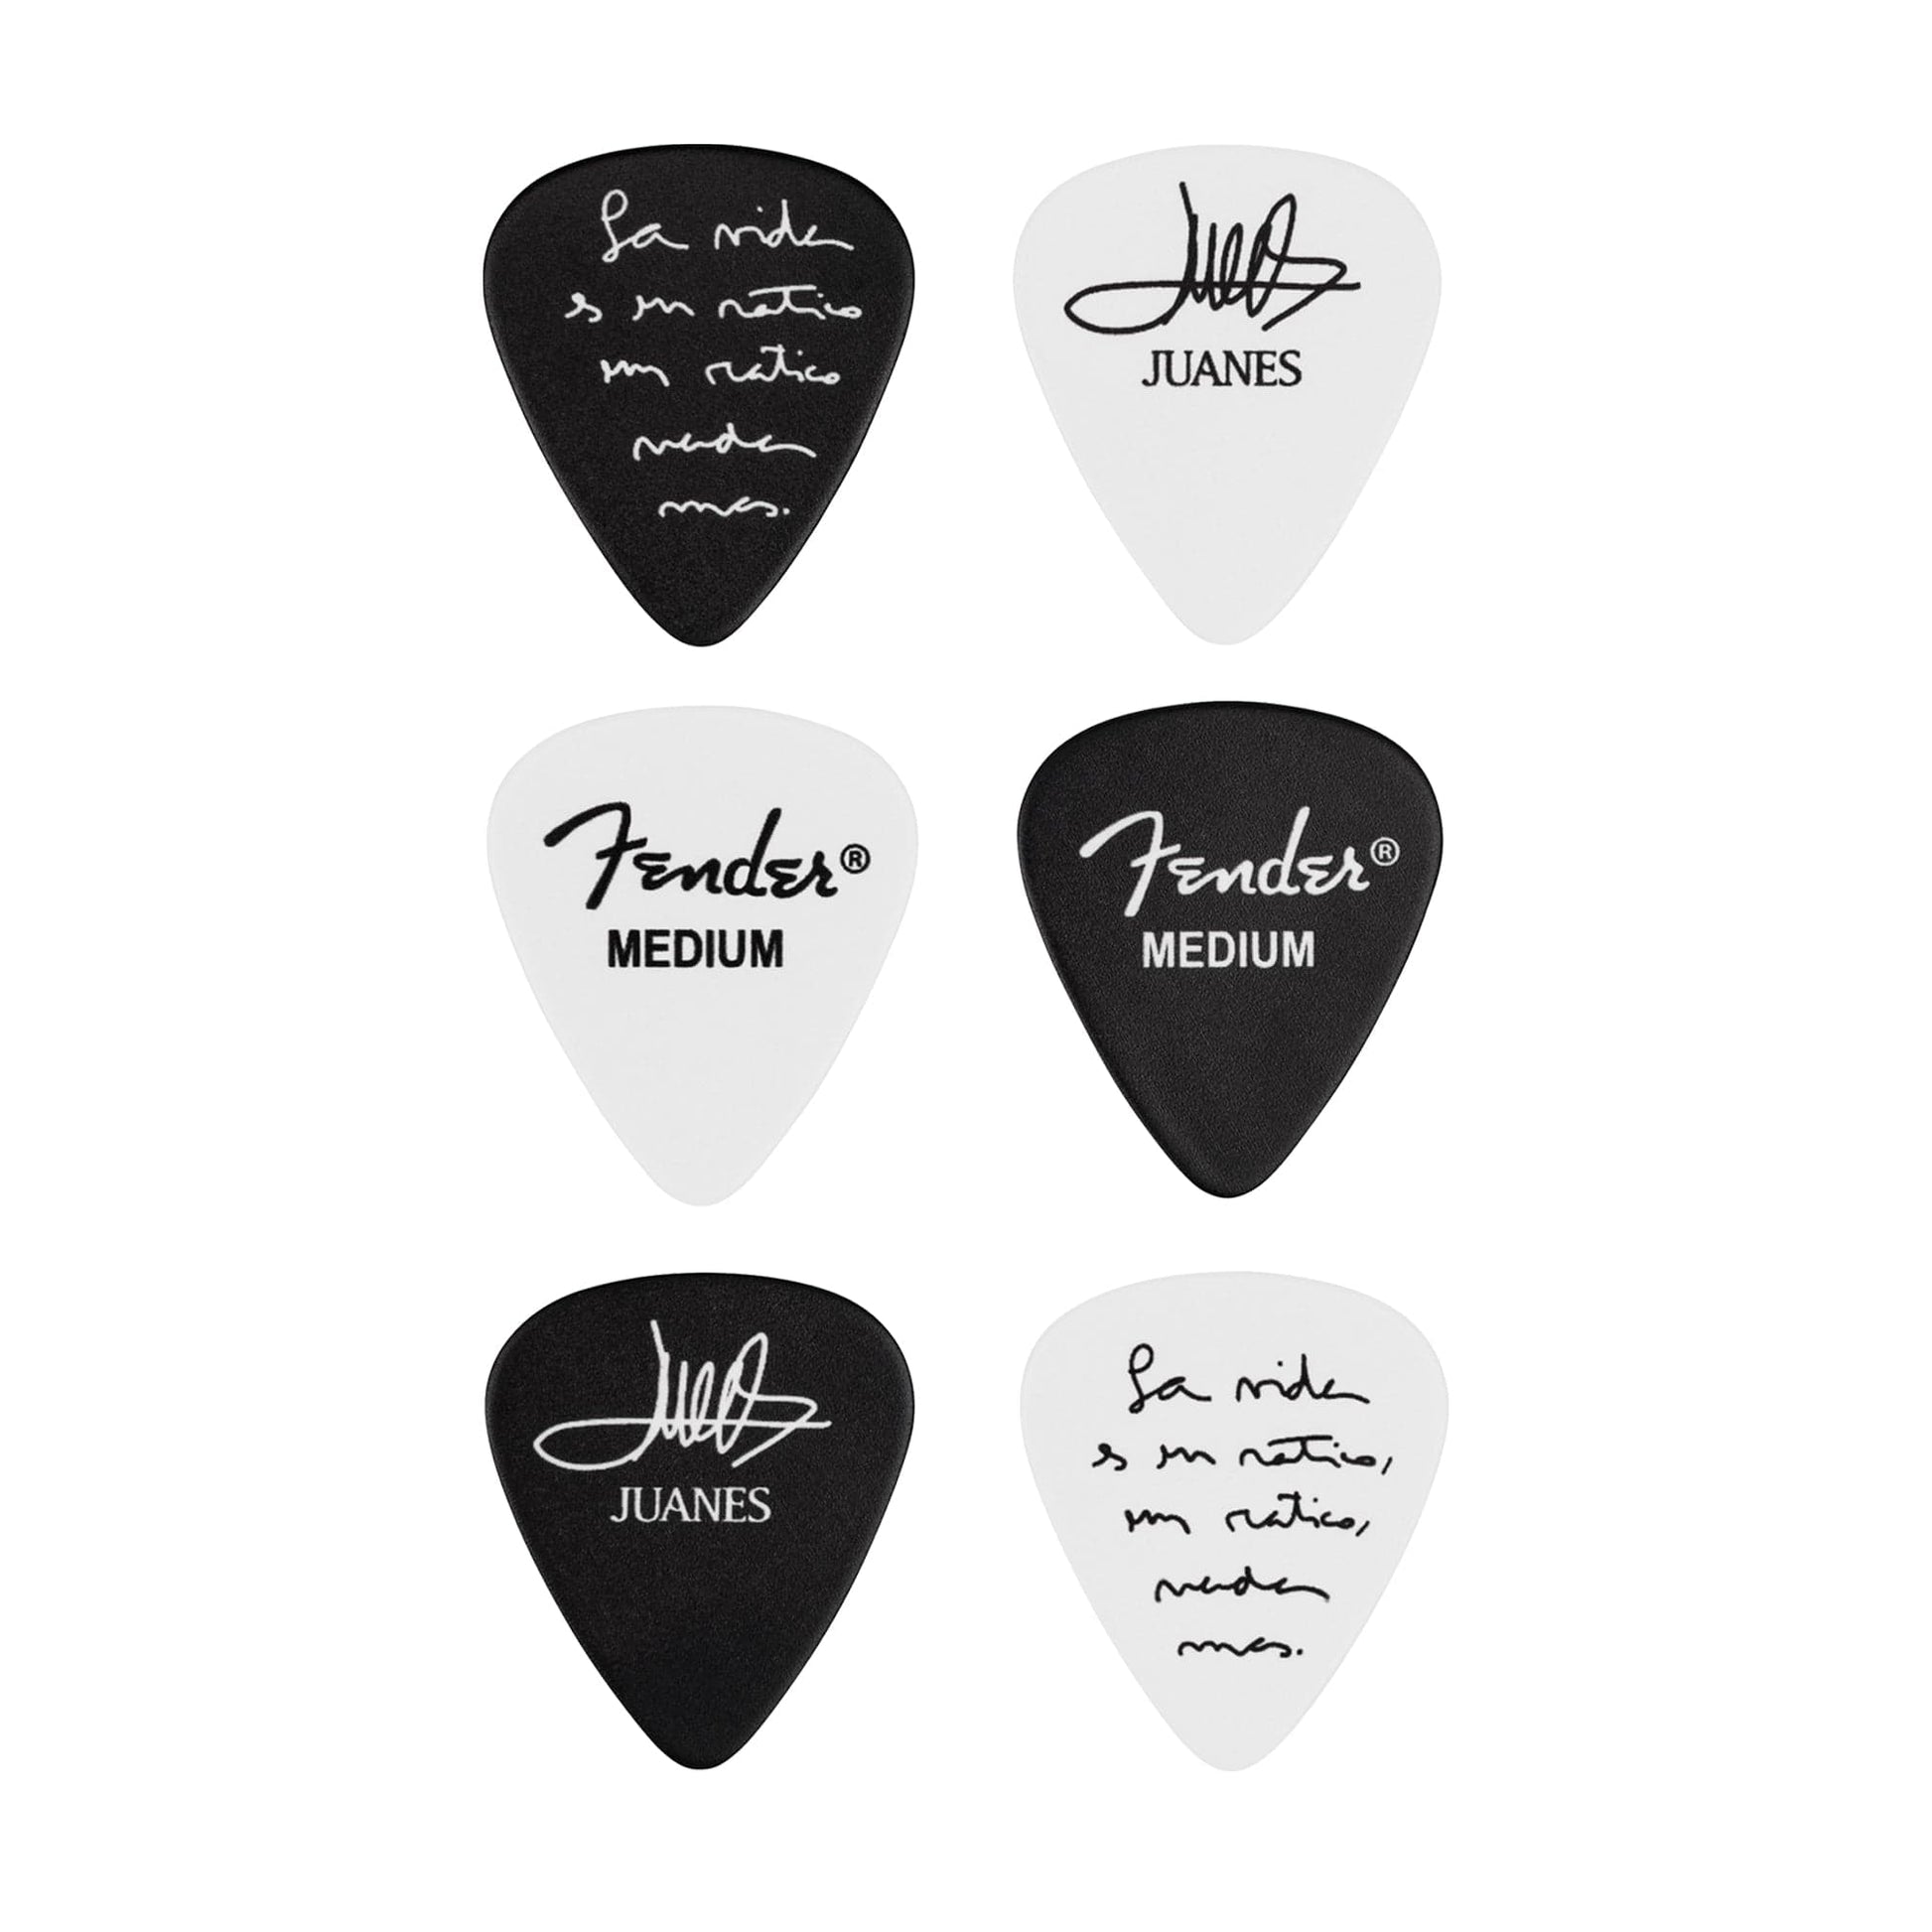 Fender Juanes 351 Celluloid Picks 2 Pack (12) Bundle Accessories / Picks